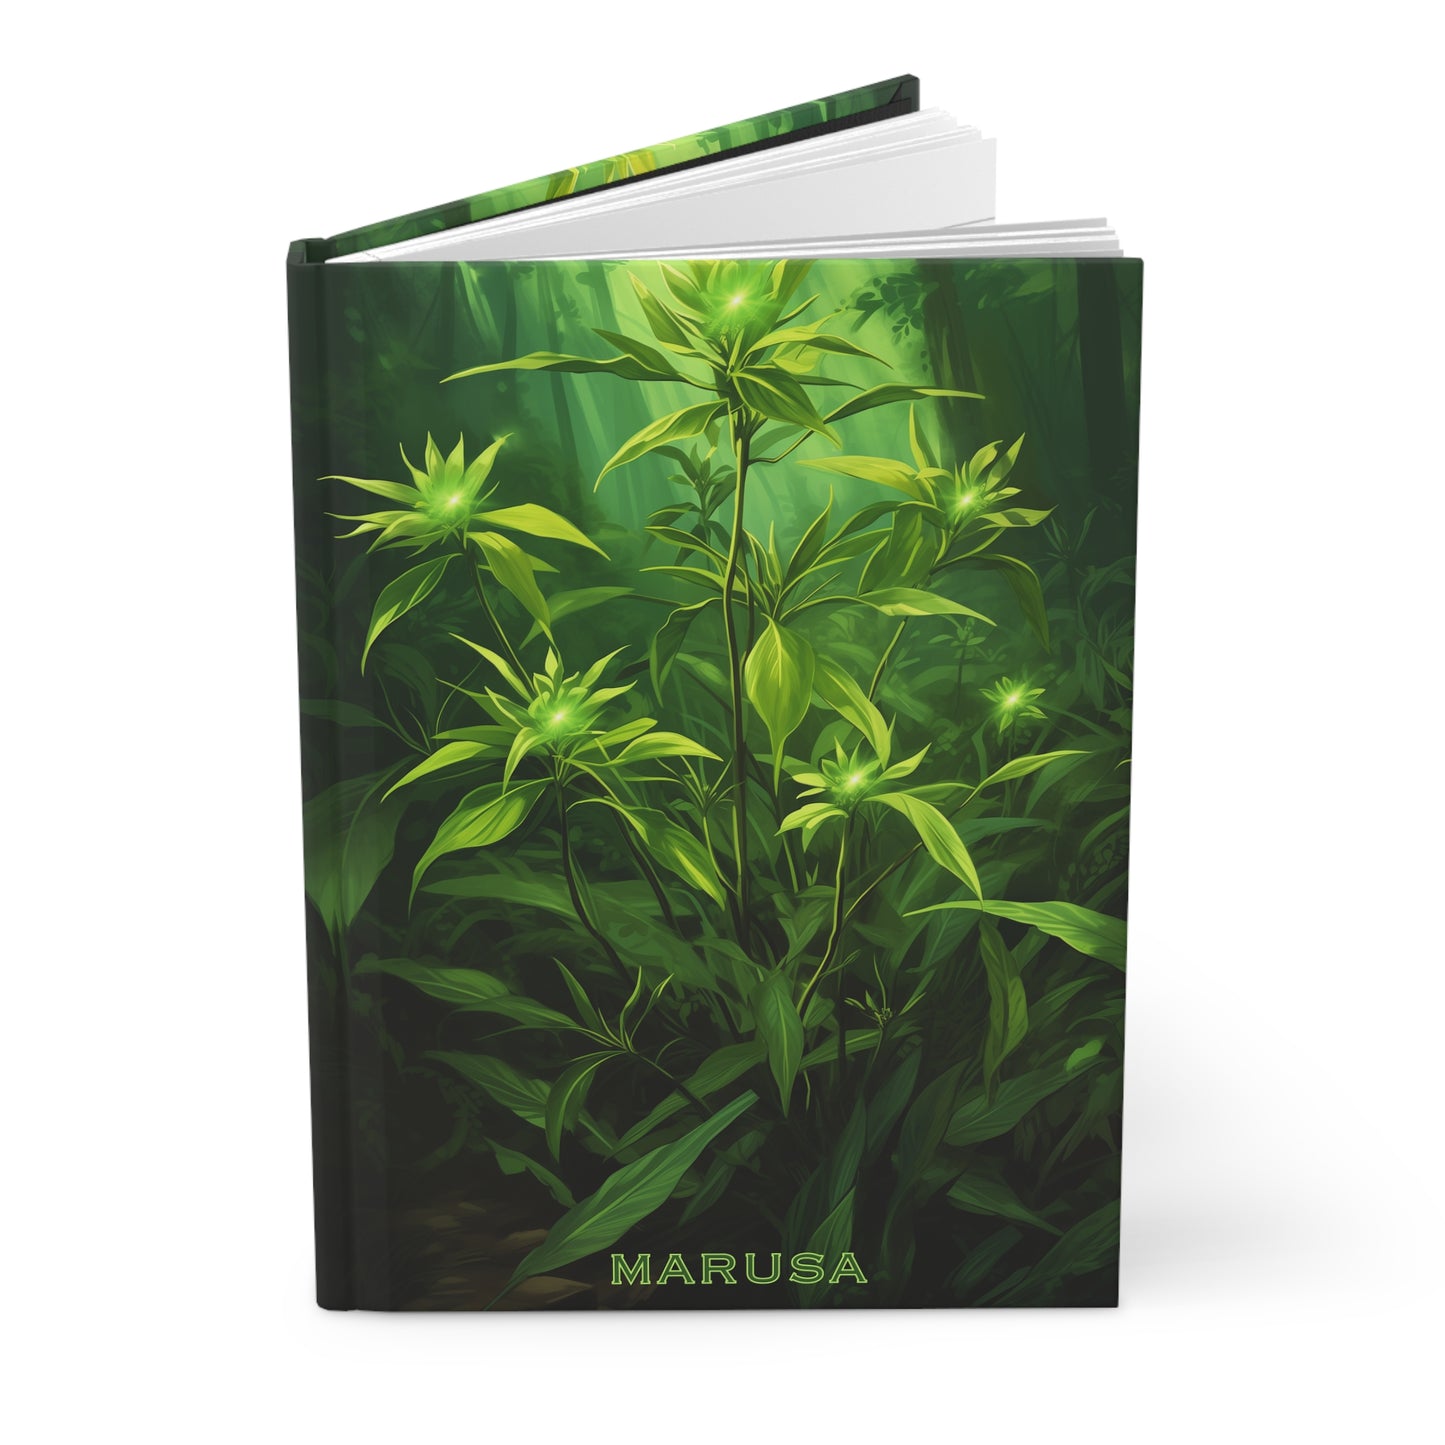 Marusa Hardcover Journal